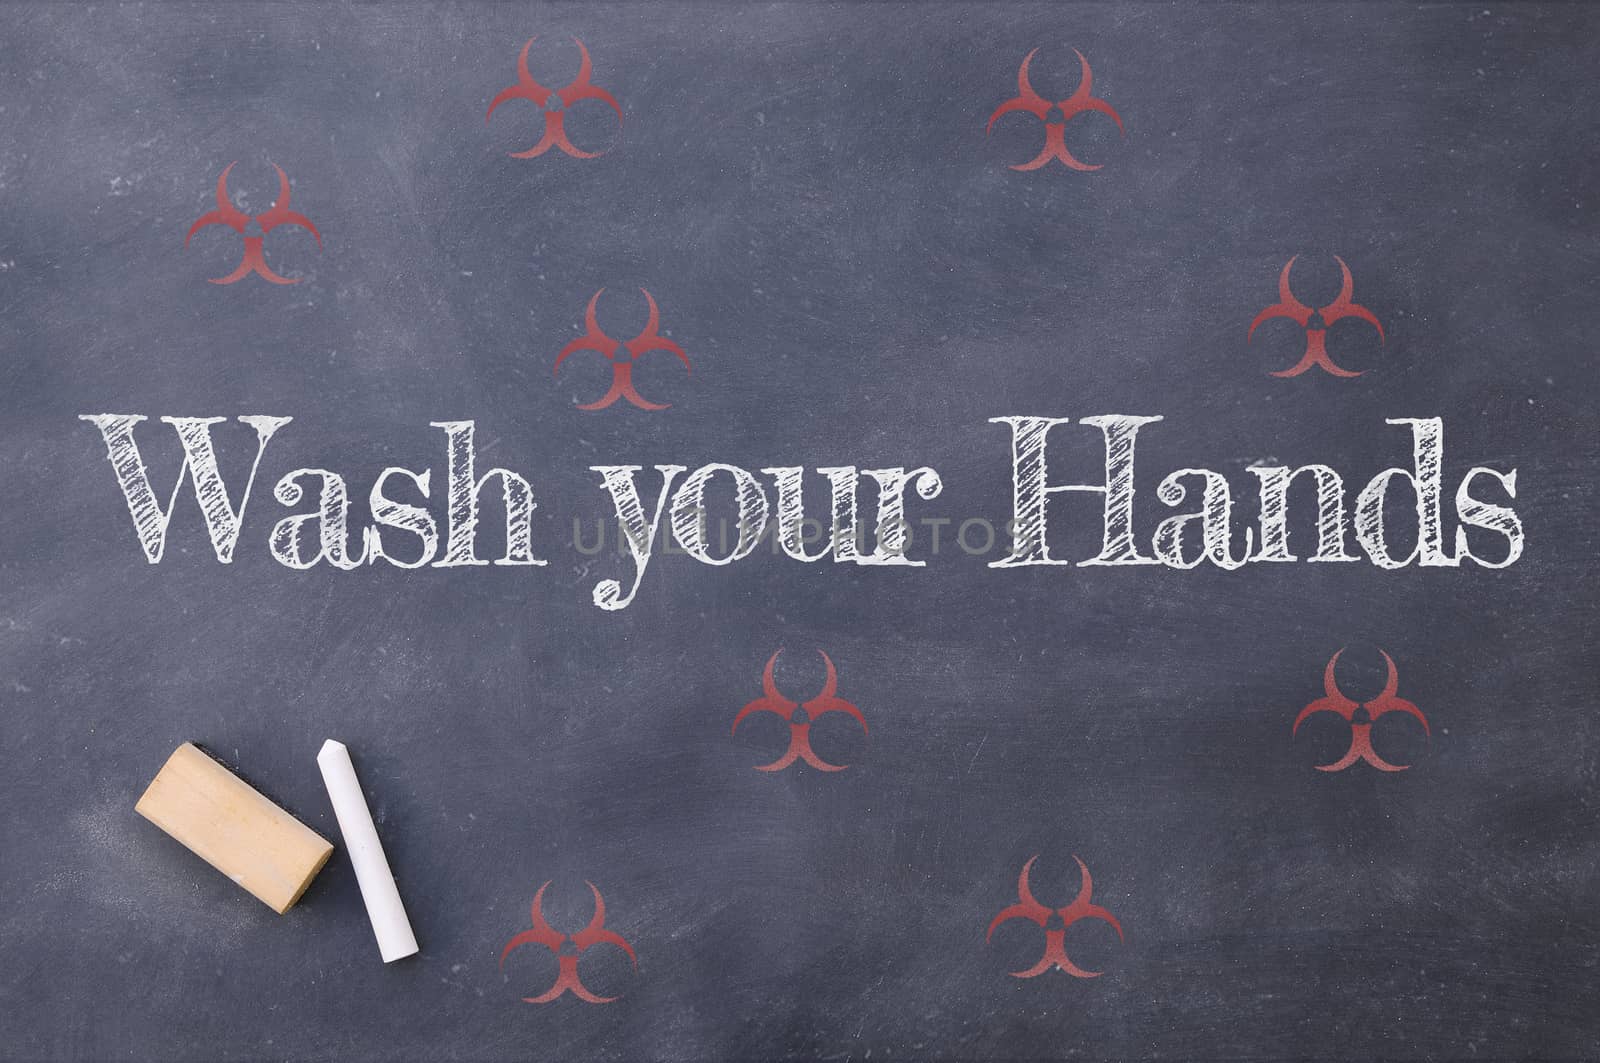 Coronavirus pandemic behaviour rules or health advice. Wash your hands chalkboard inscription.